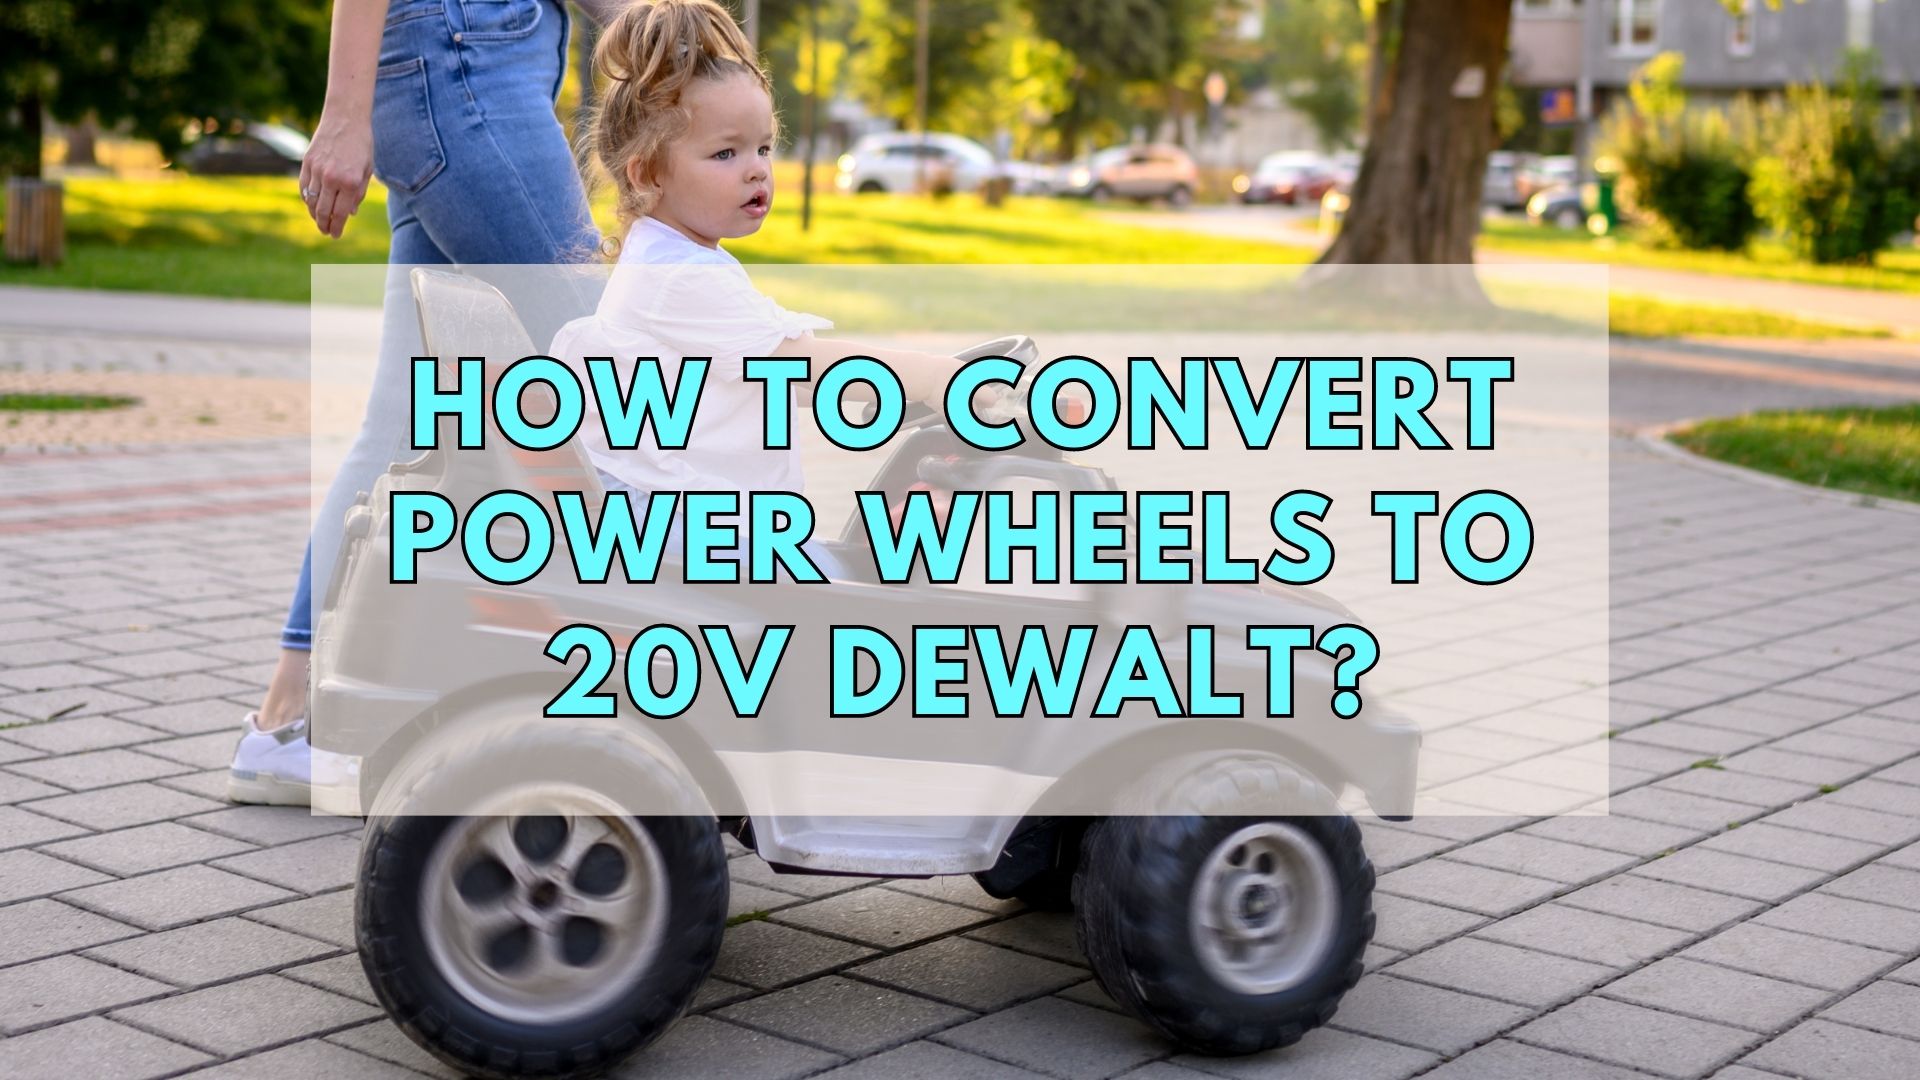 How To Convert Power Wheels To 20V Dewalt